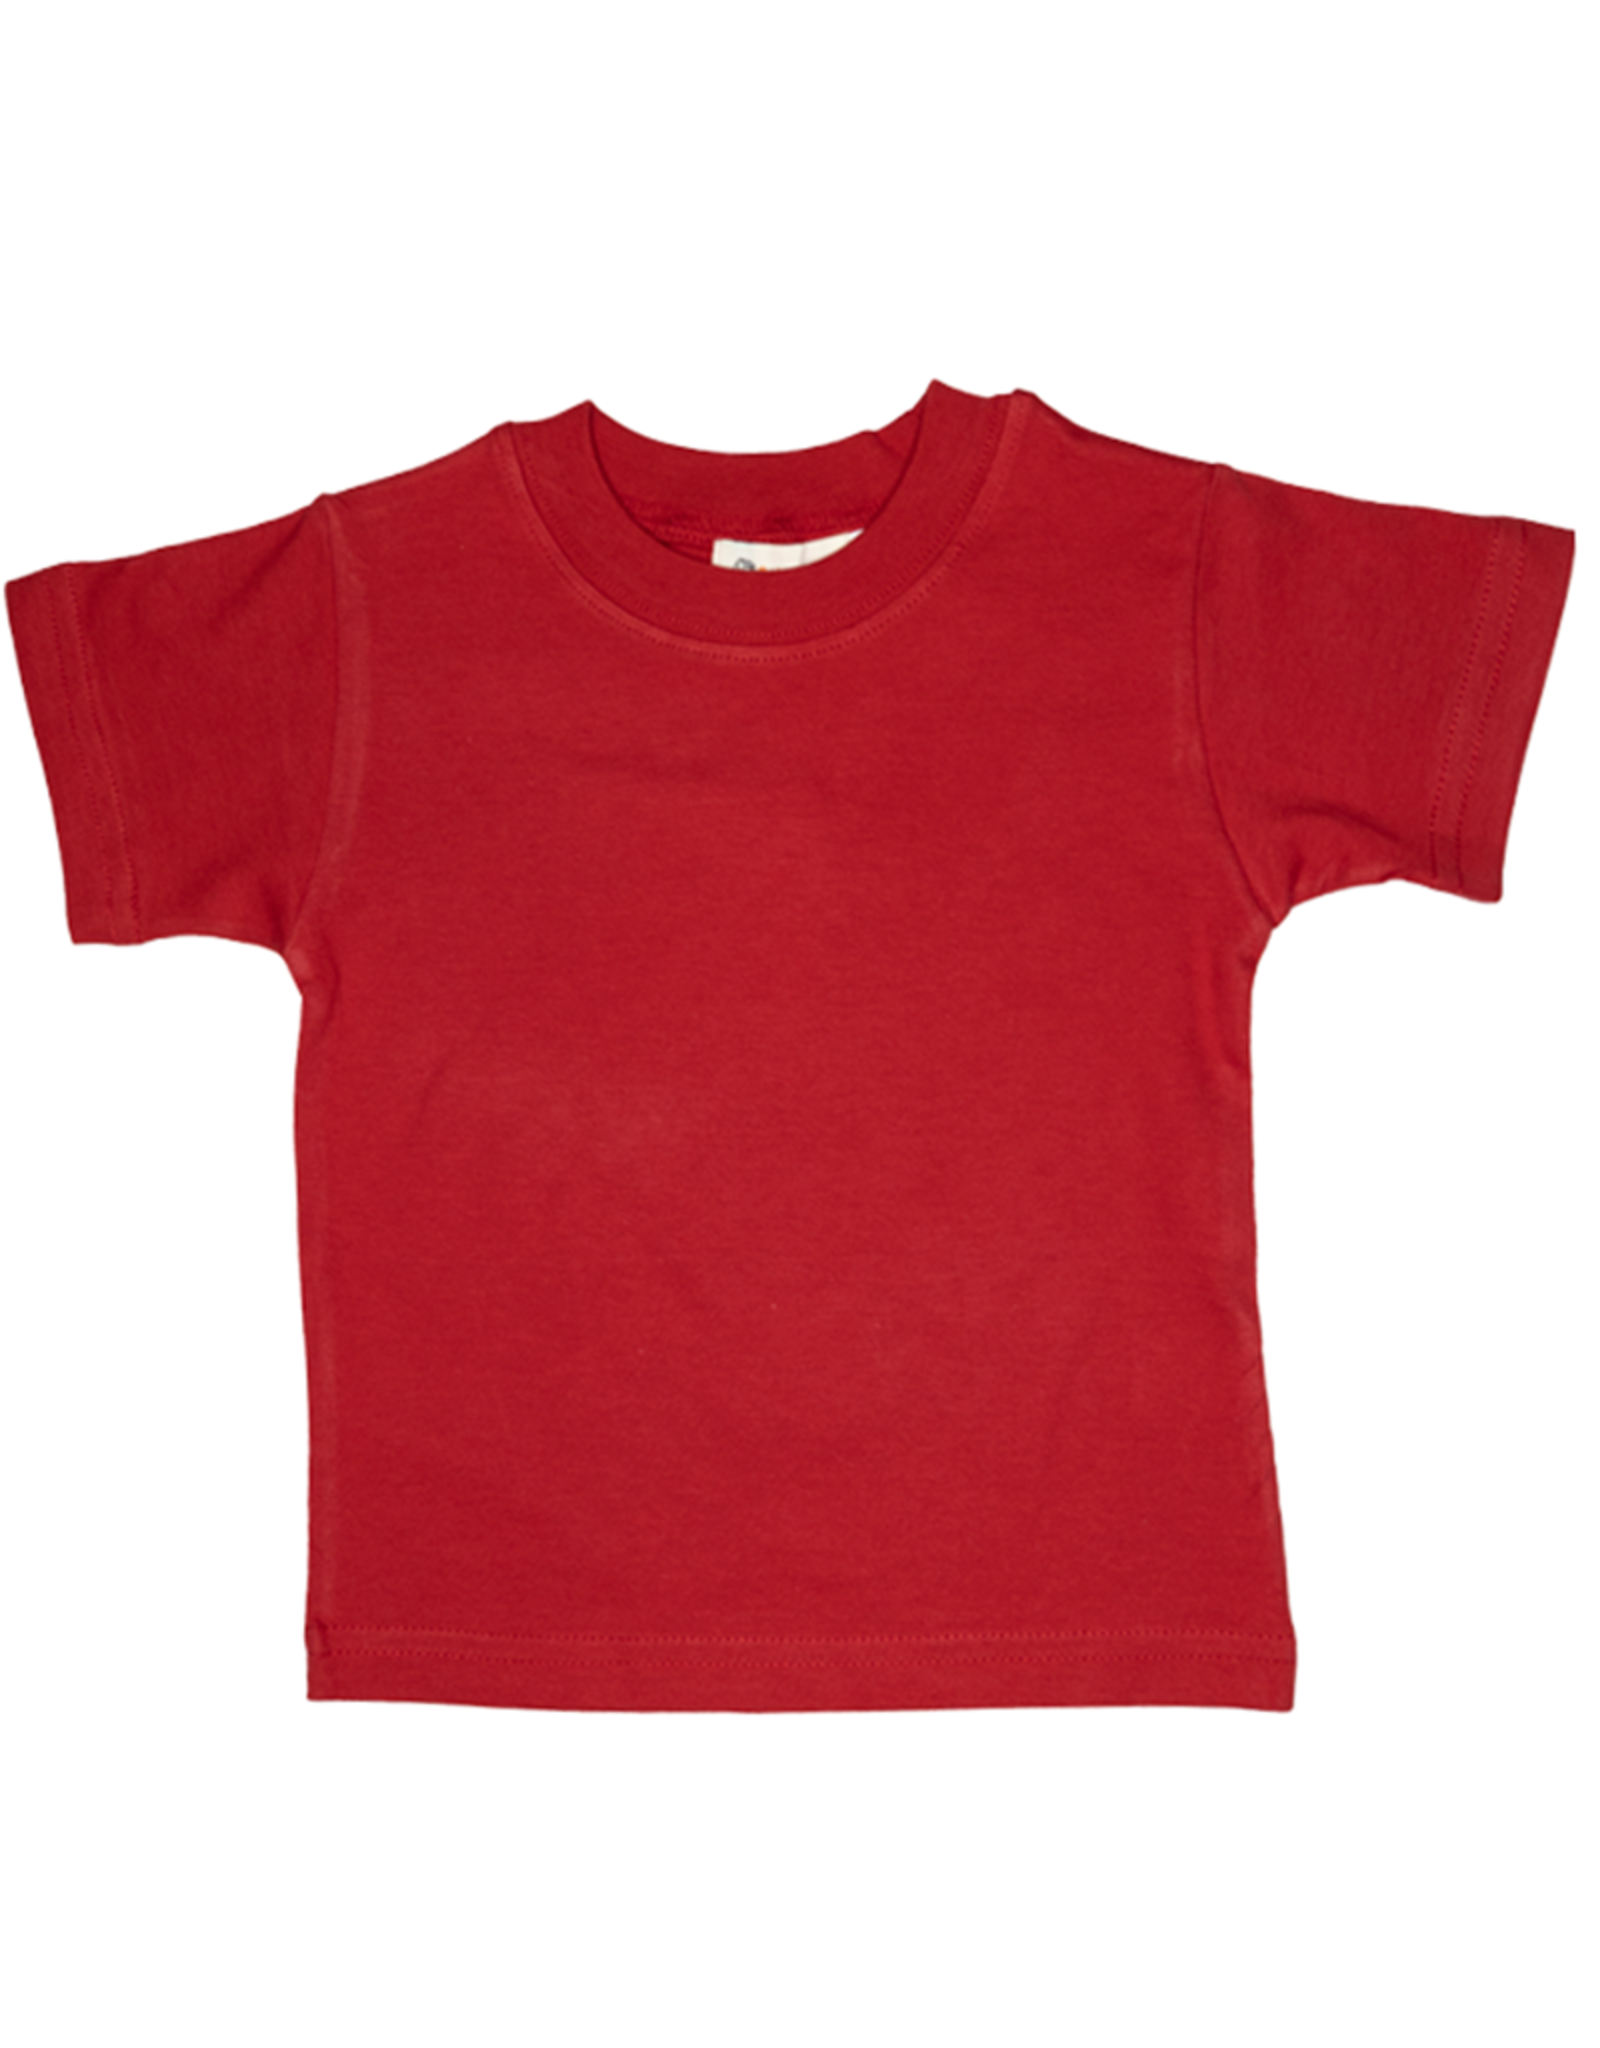 Luigi S/S Solid Shirt Red 81